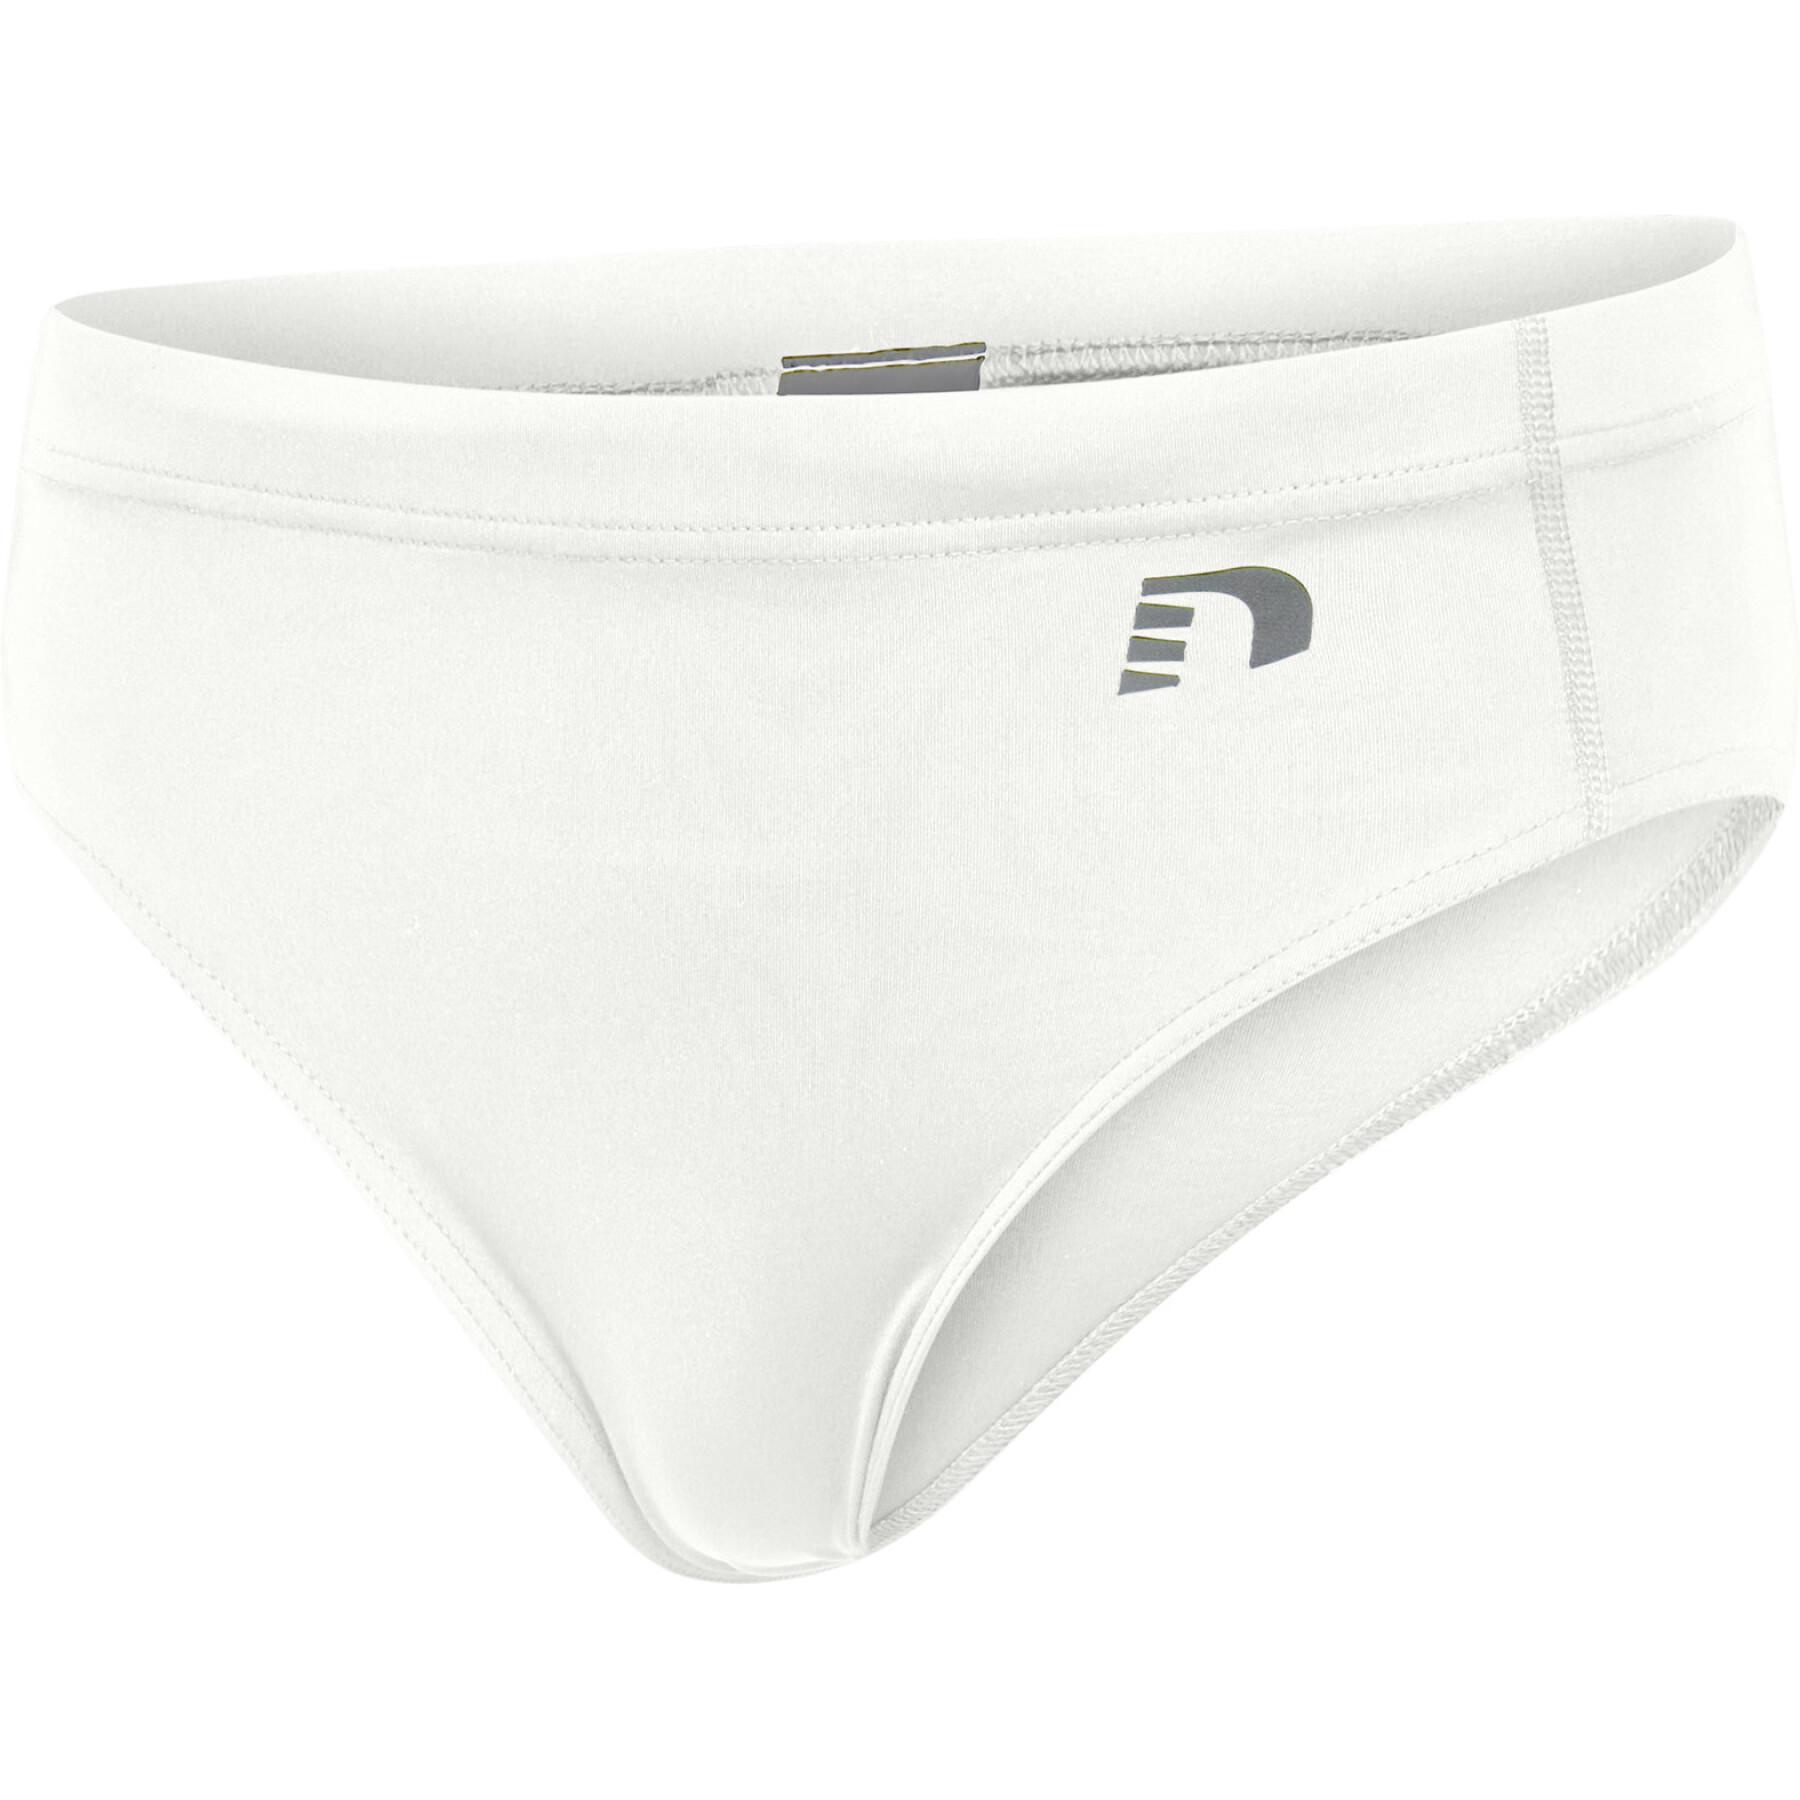 Women's panties Newline core athletic brief - Baselayers - Women's